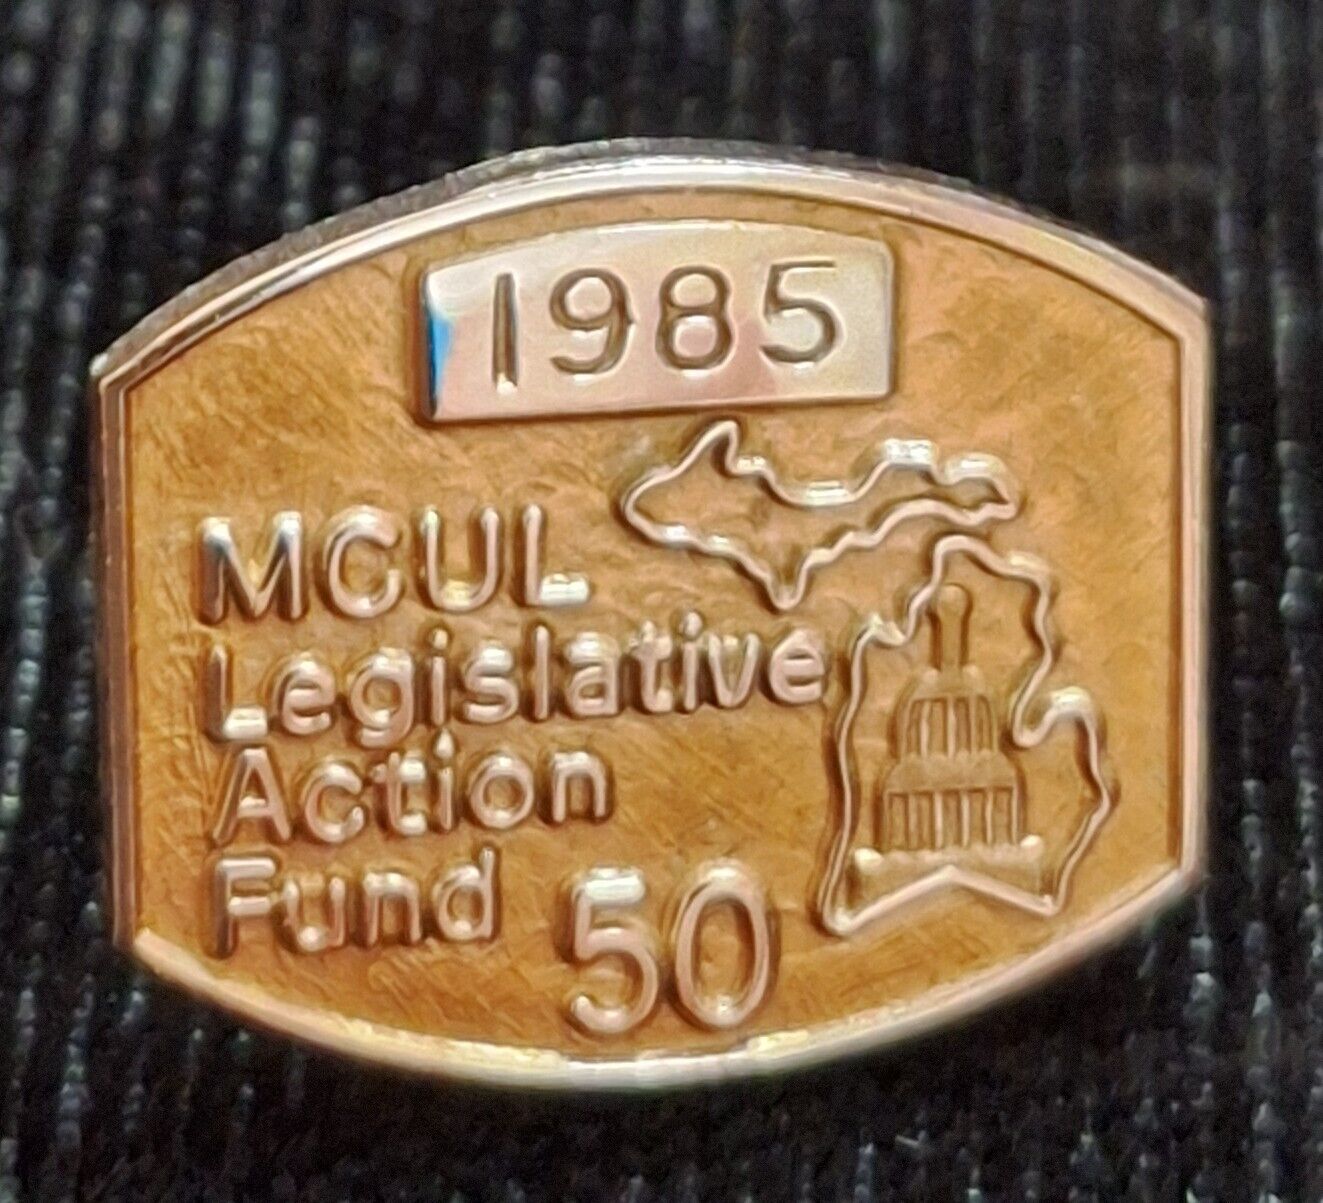 1985 MICHIGAN CREDIT UNION LEAGUE MCUL LEGISLATIVE ACTION FUND 50 LAPEL PIN